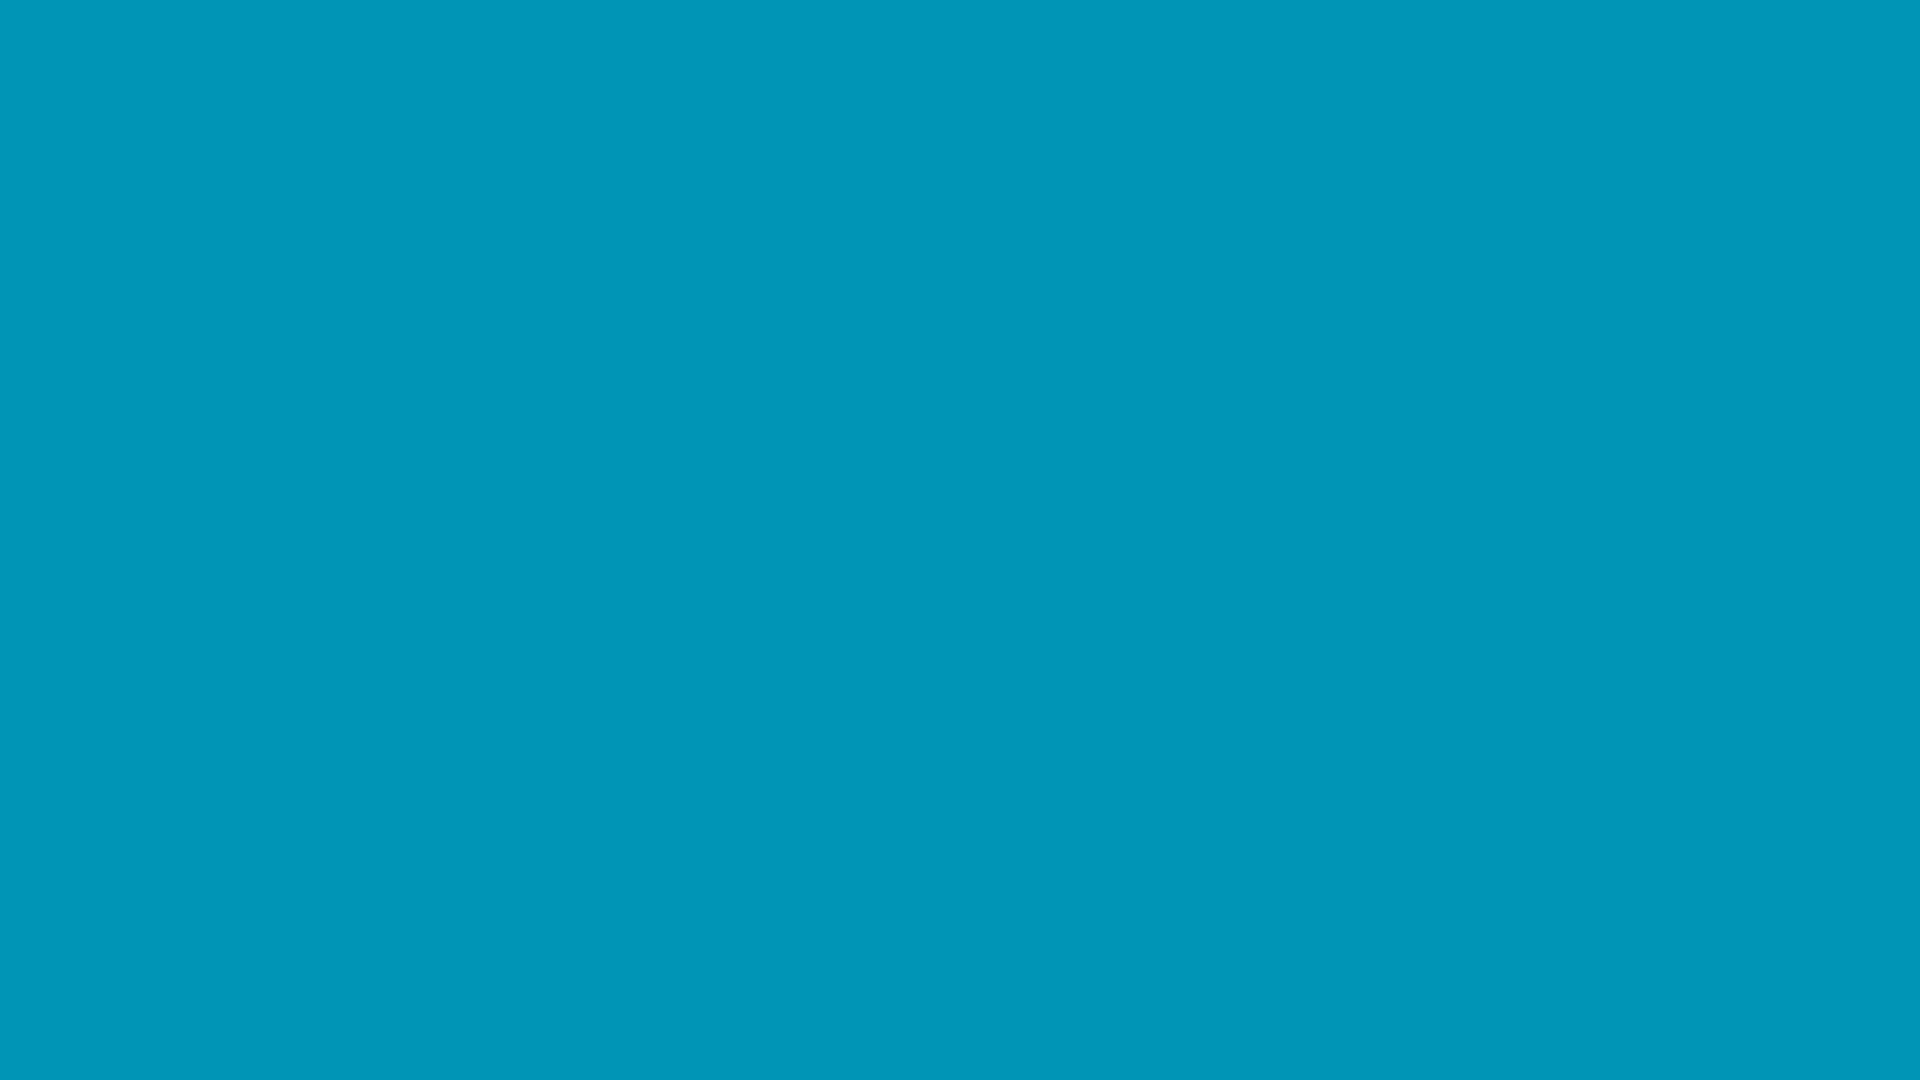 1920x1080 Bondi Blue Solid Color Background